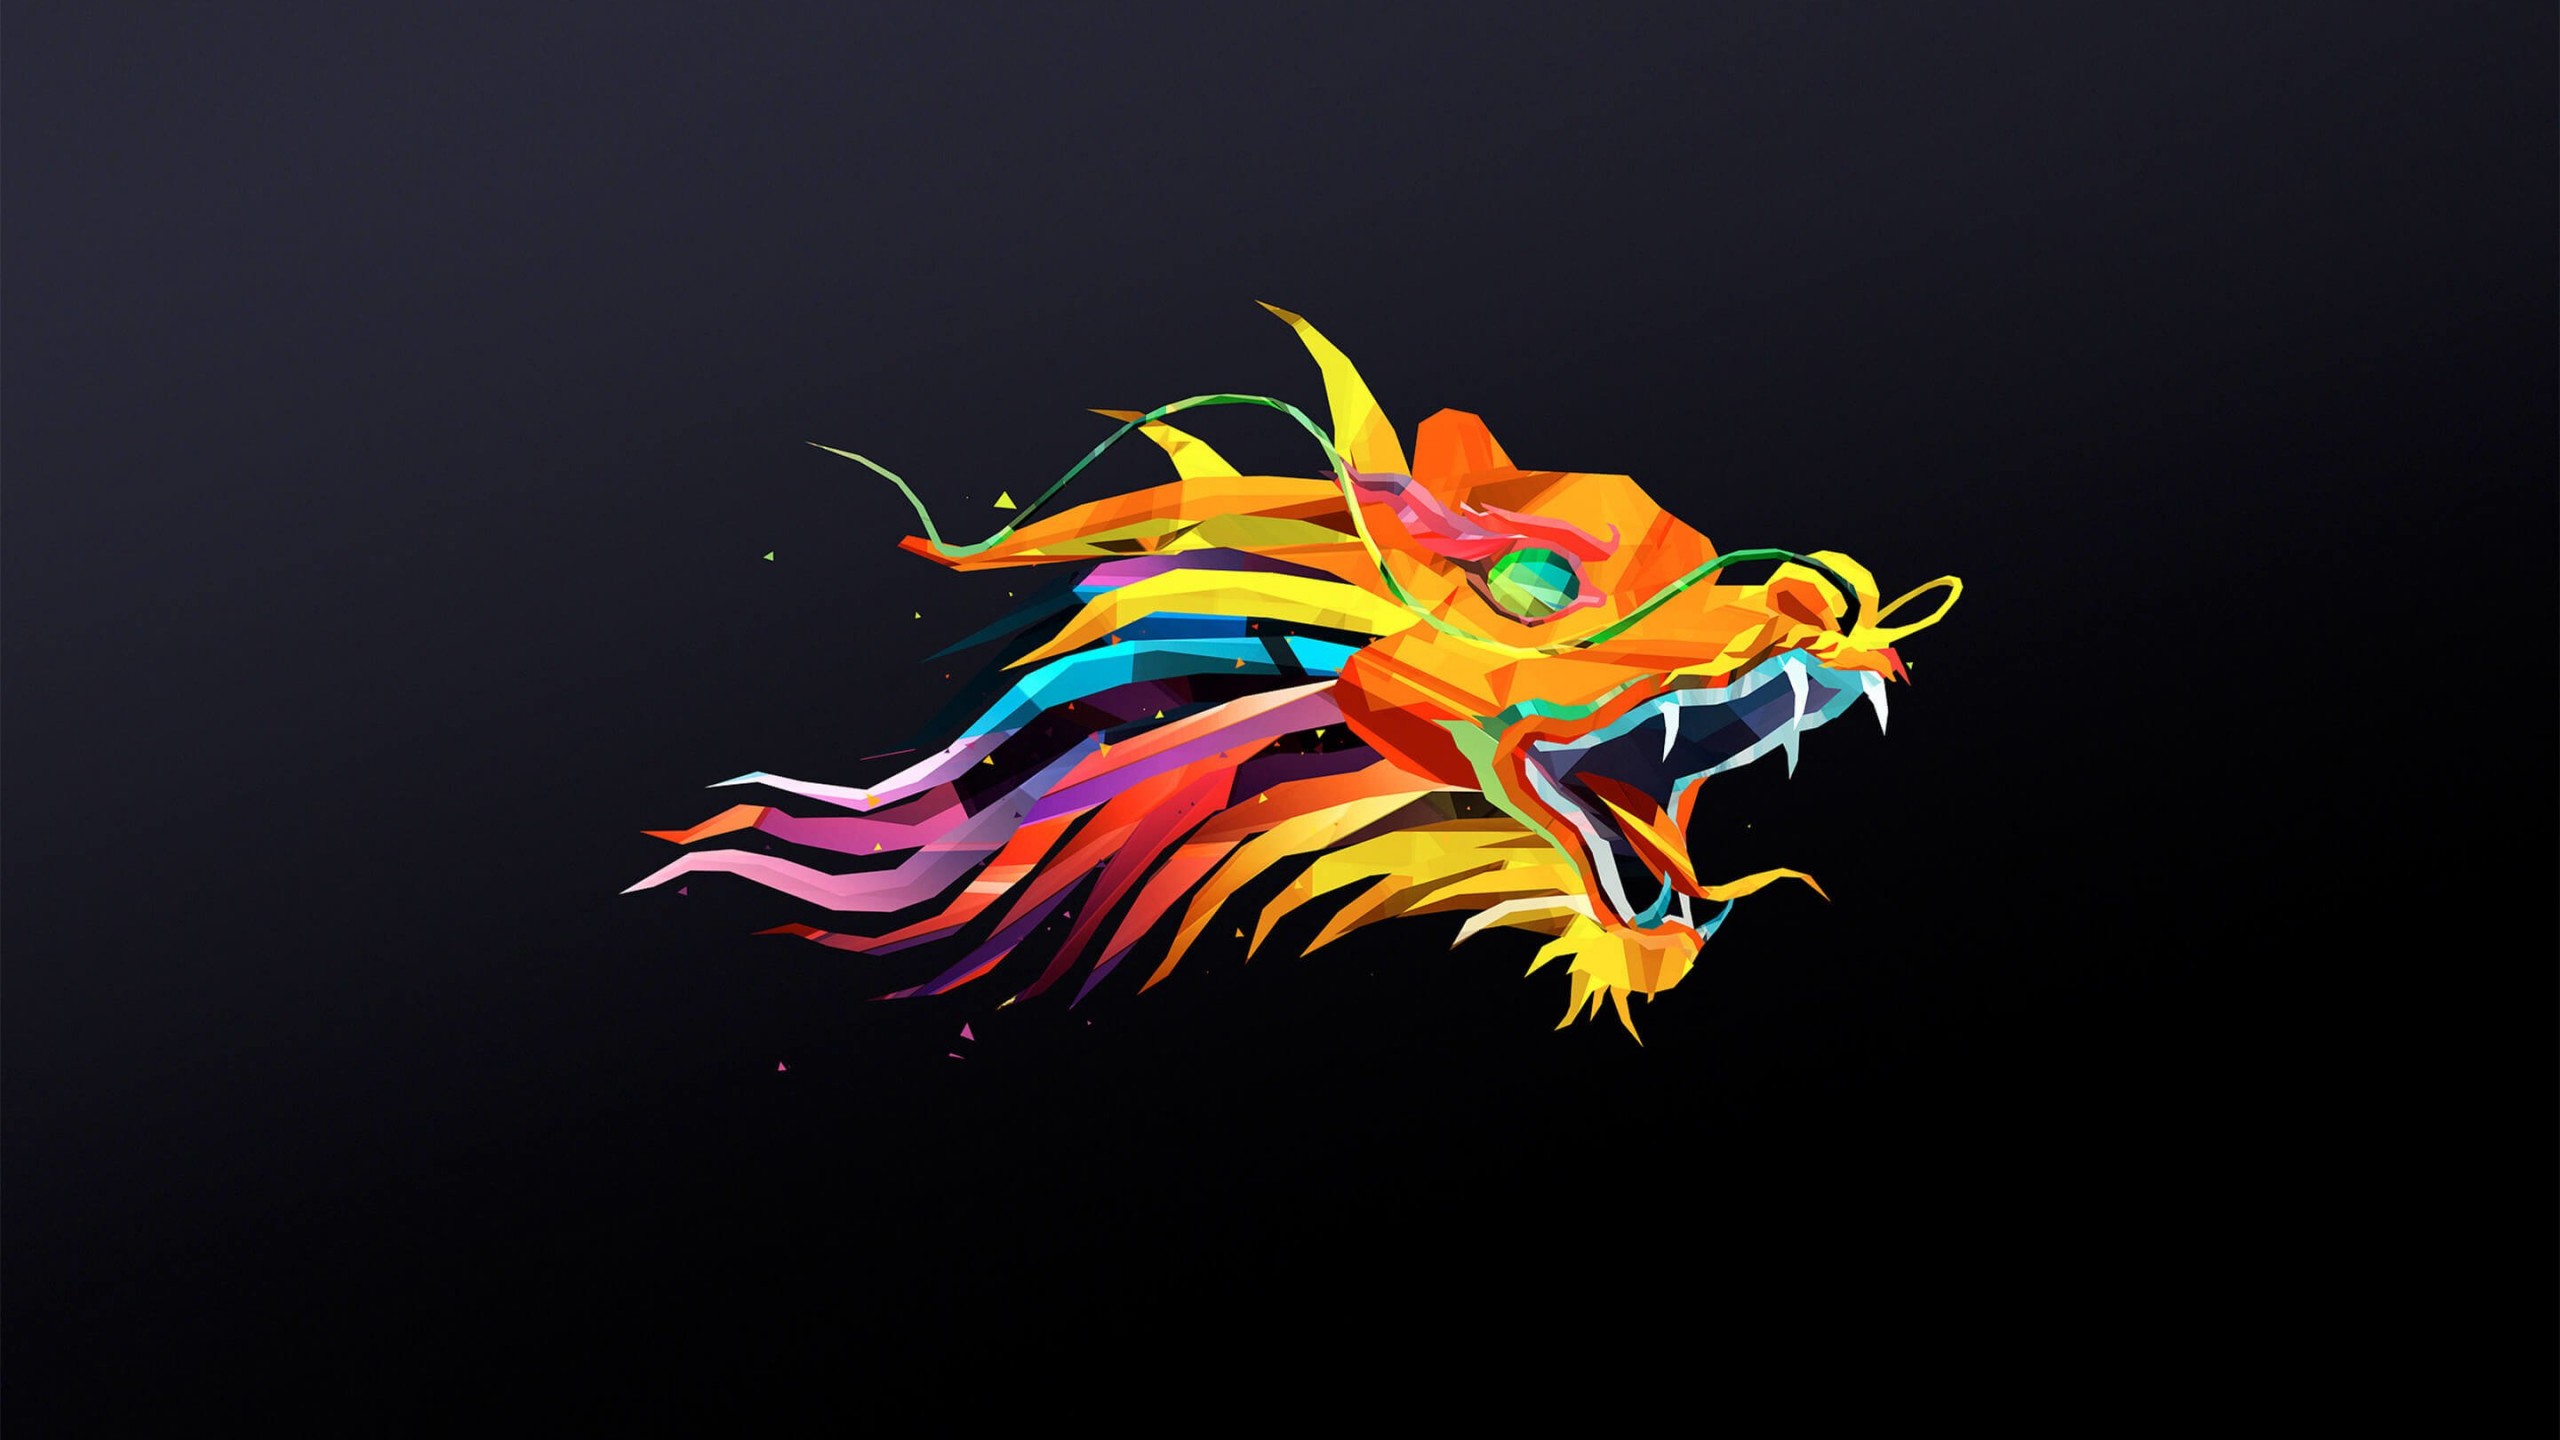 The Dragon Wallpaper for Desktop 2560x1440